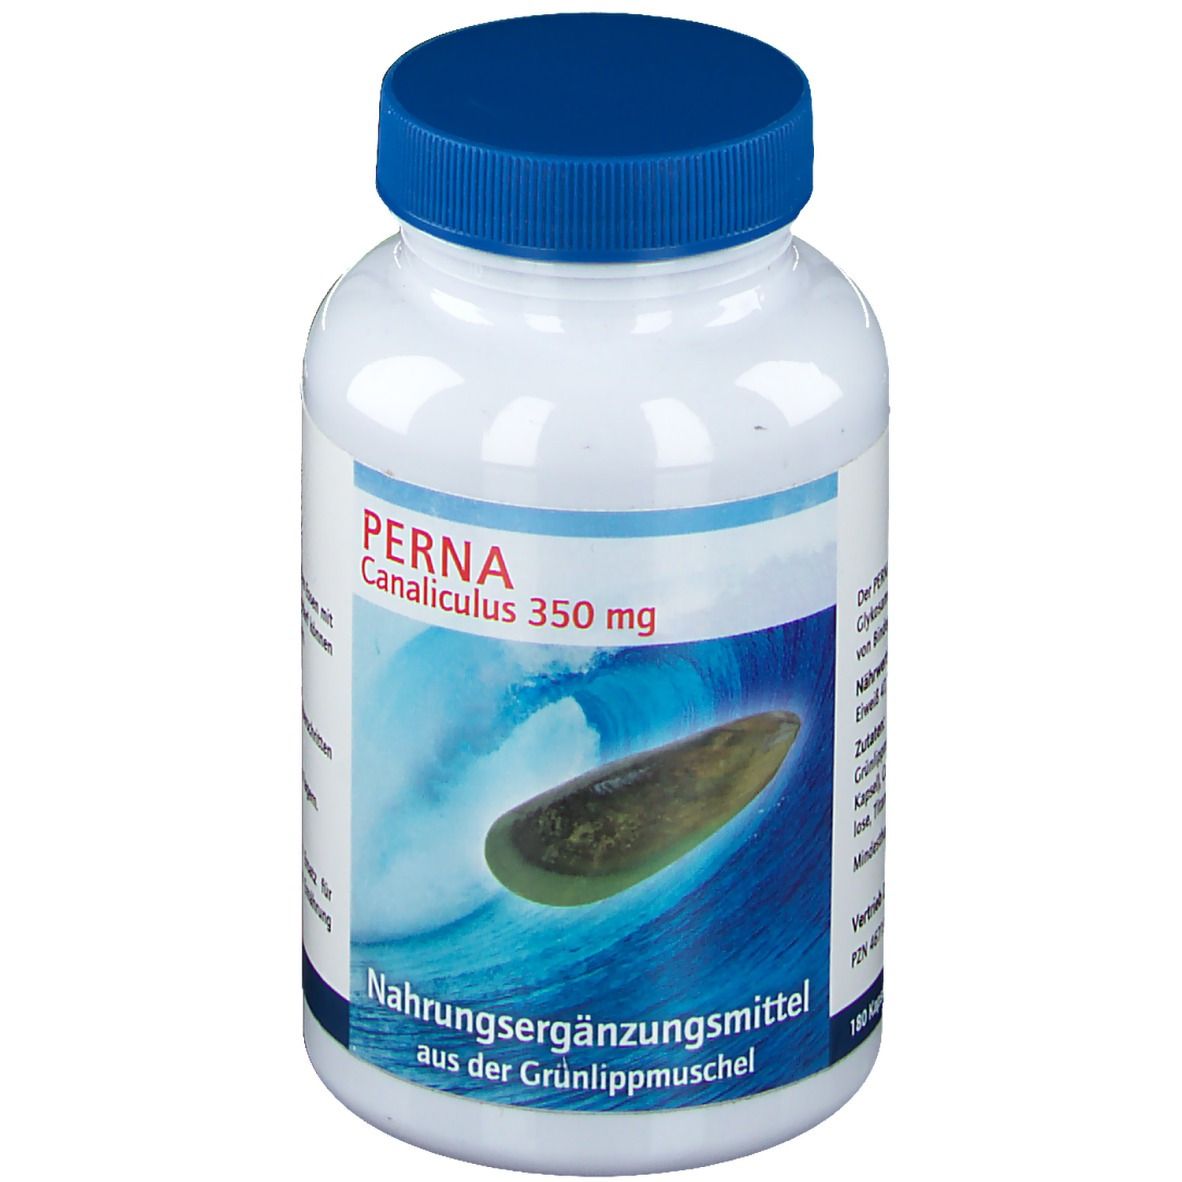 Image of PERNA Canaliculus 350 mg Kapseln